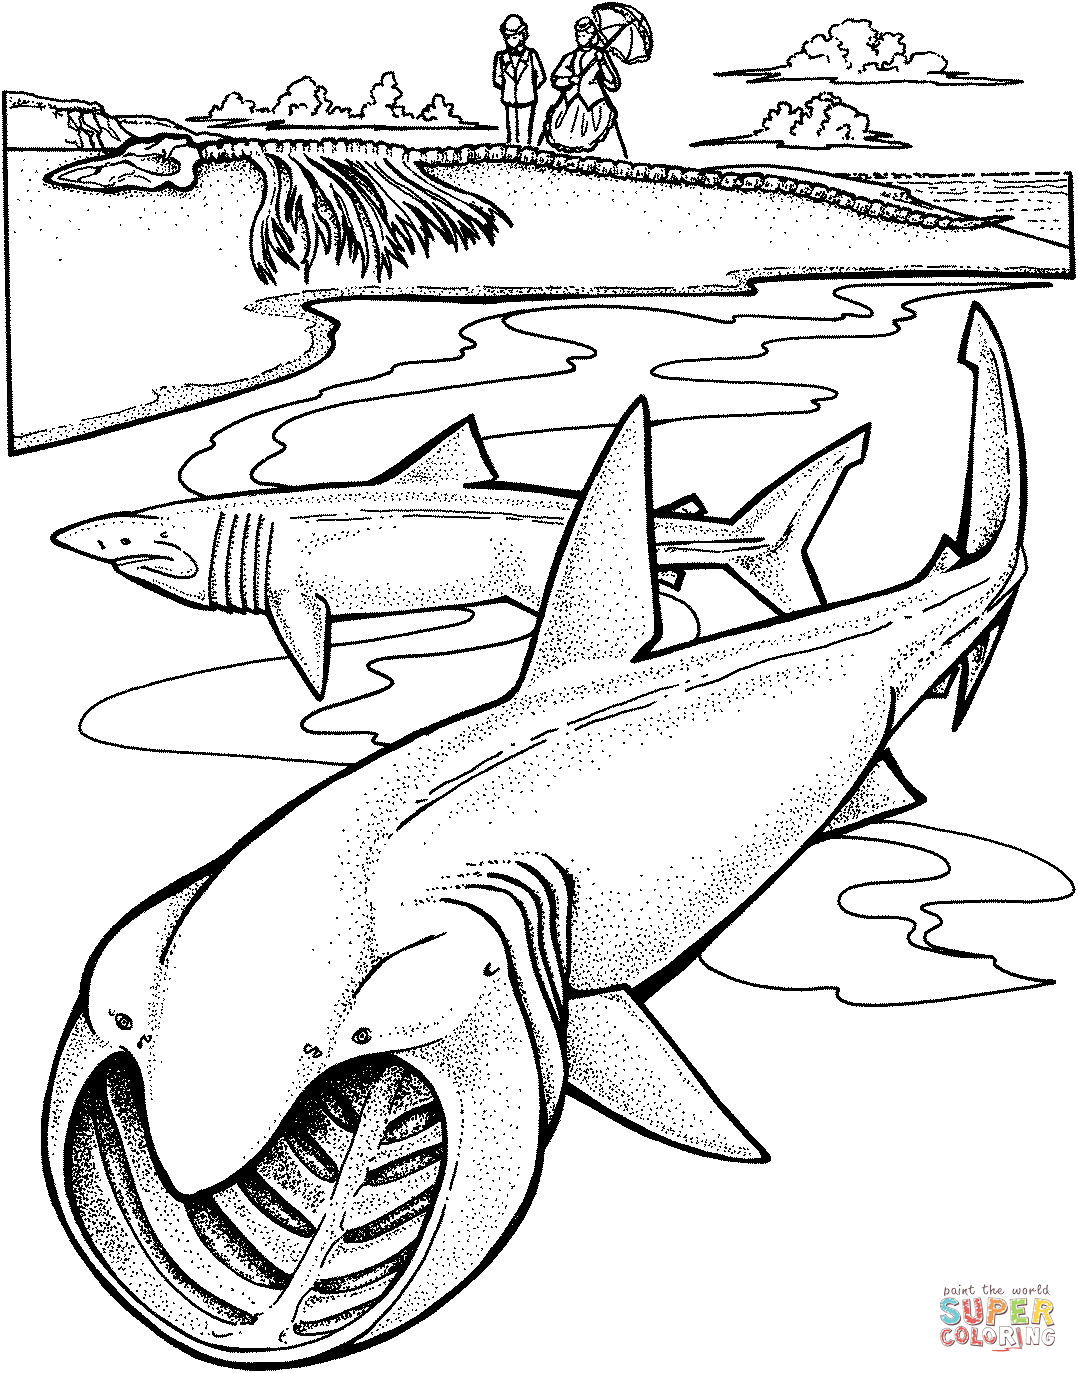 Basking Shark clipart #3, Download drawings